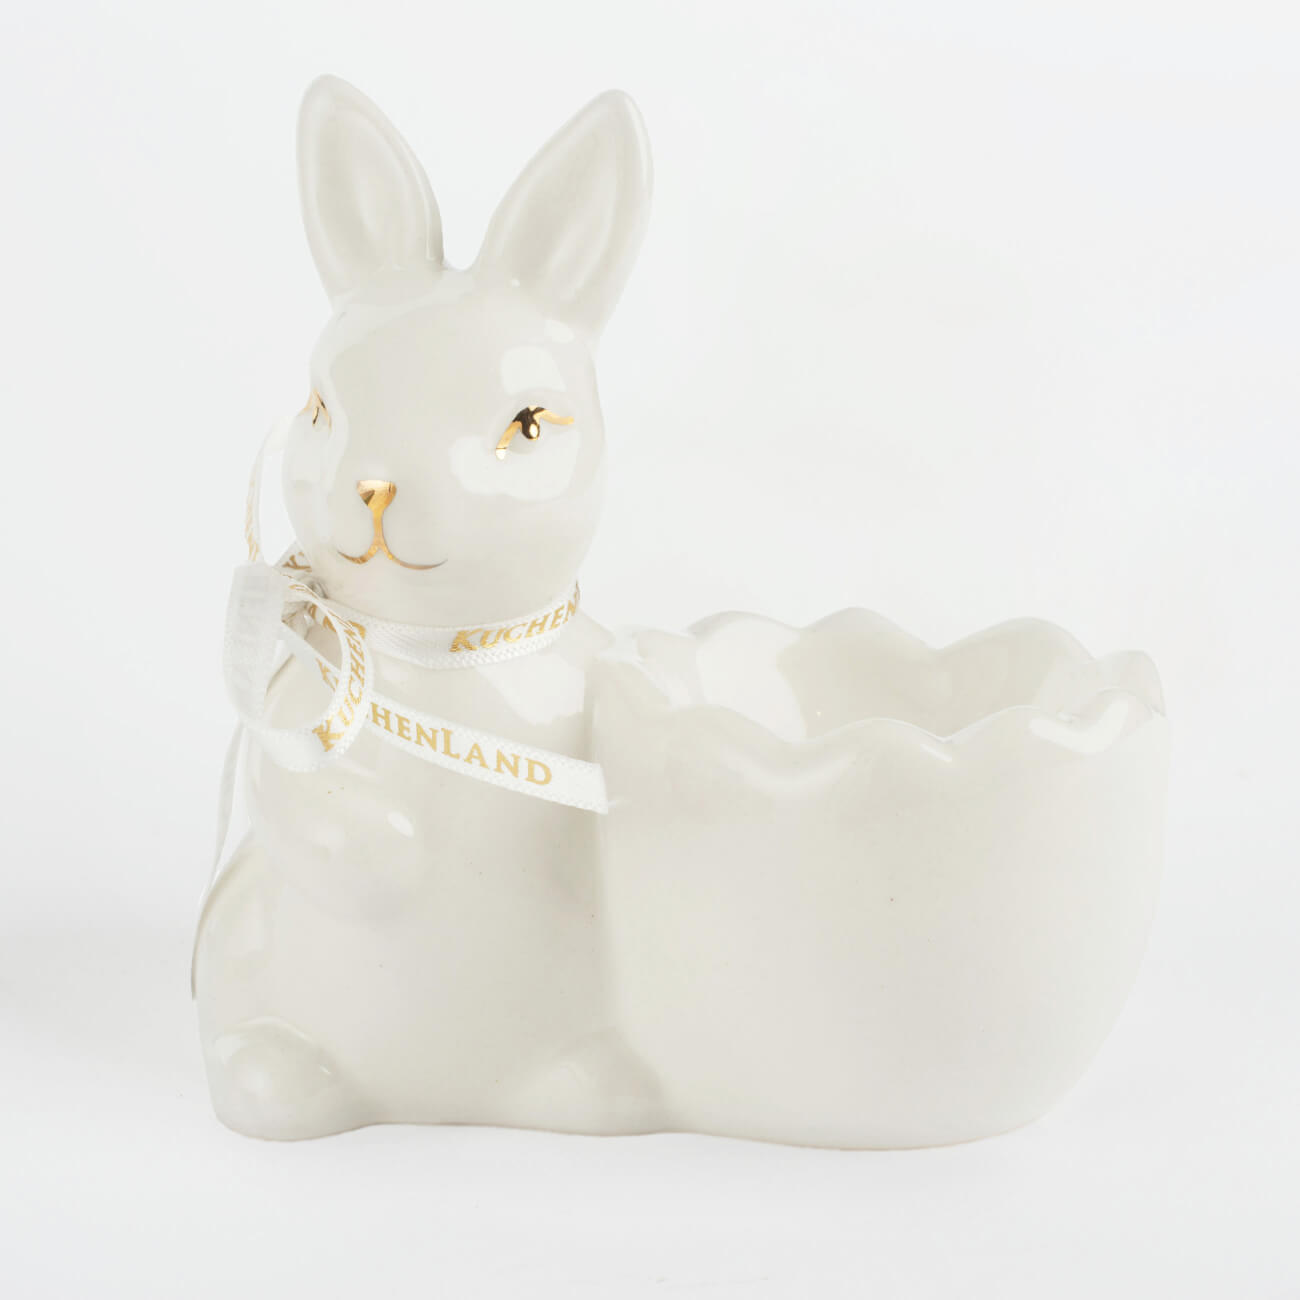 Подставка для яйца, 10 см, керамика, бело-золотистая, Кролик со скорлупкой, Easter gold подставка glasar бабочки золотистая 33х33х75 см